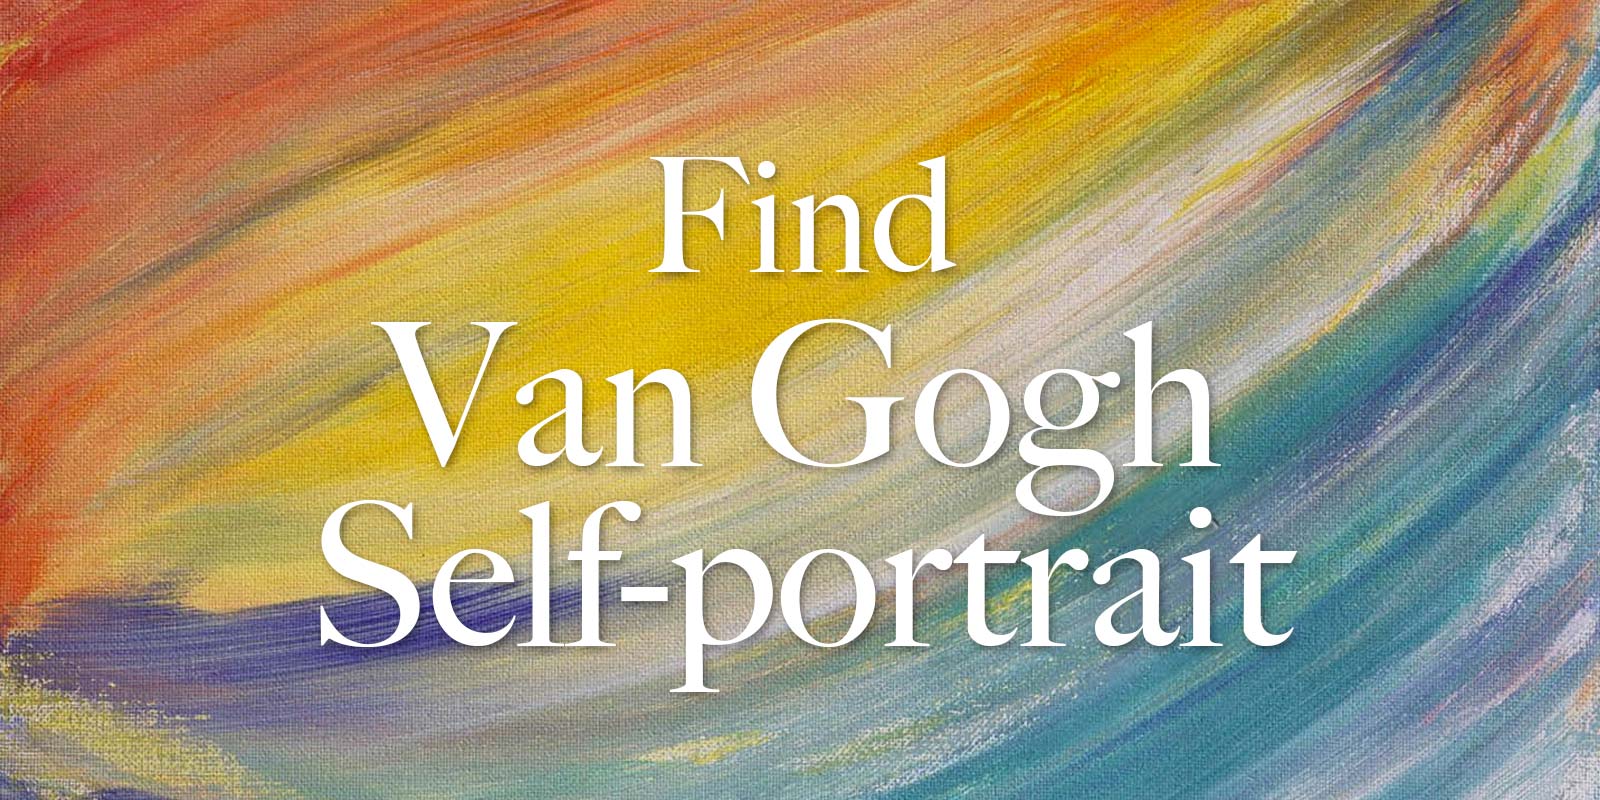 Famous Art Quiz Van Gogh Self Portrait